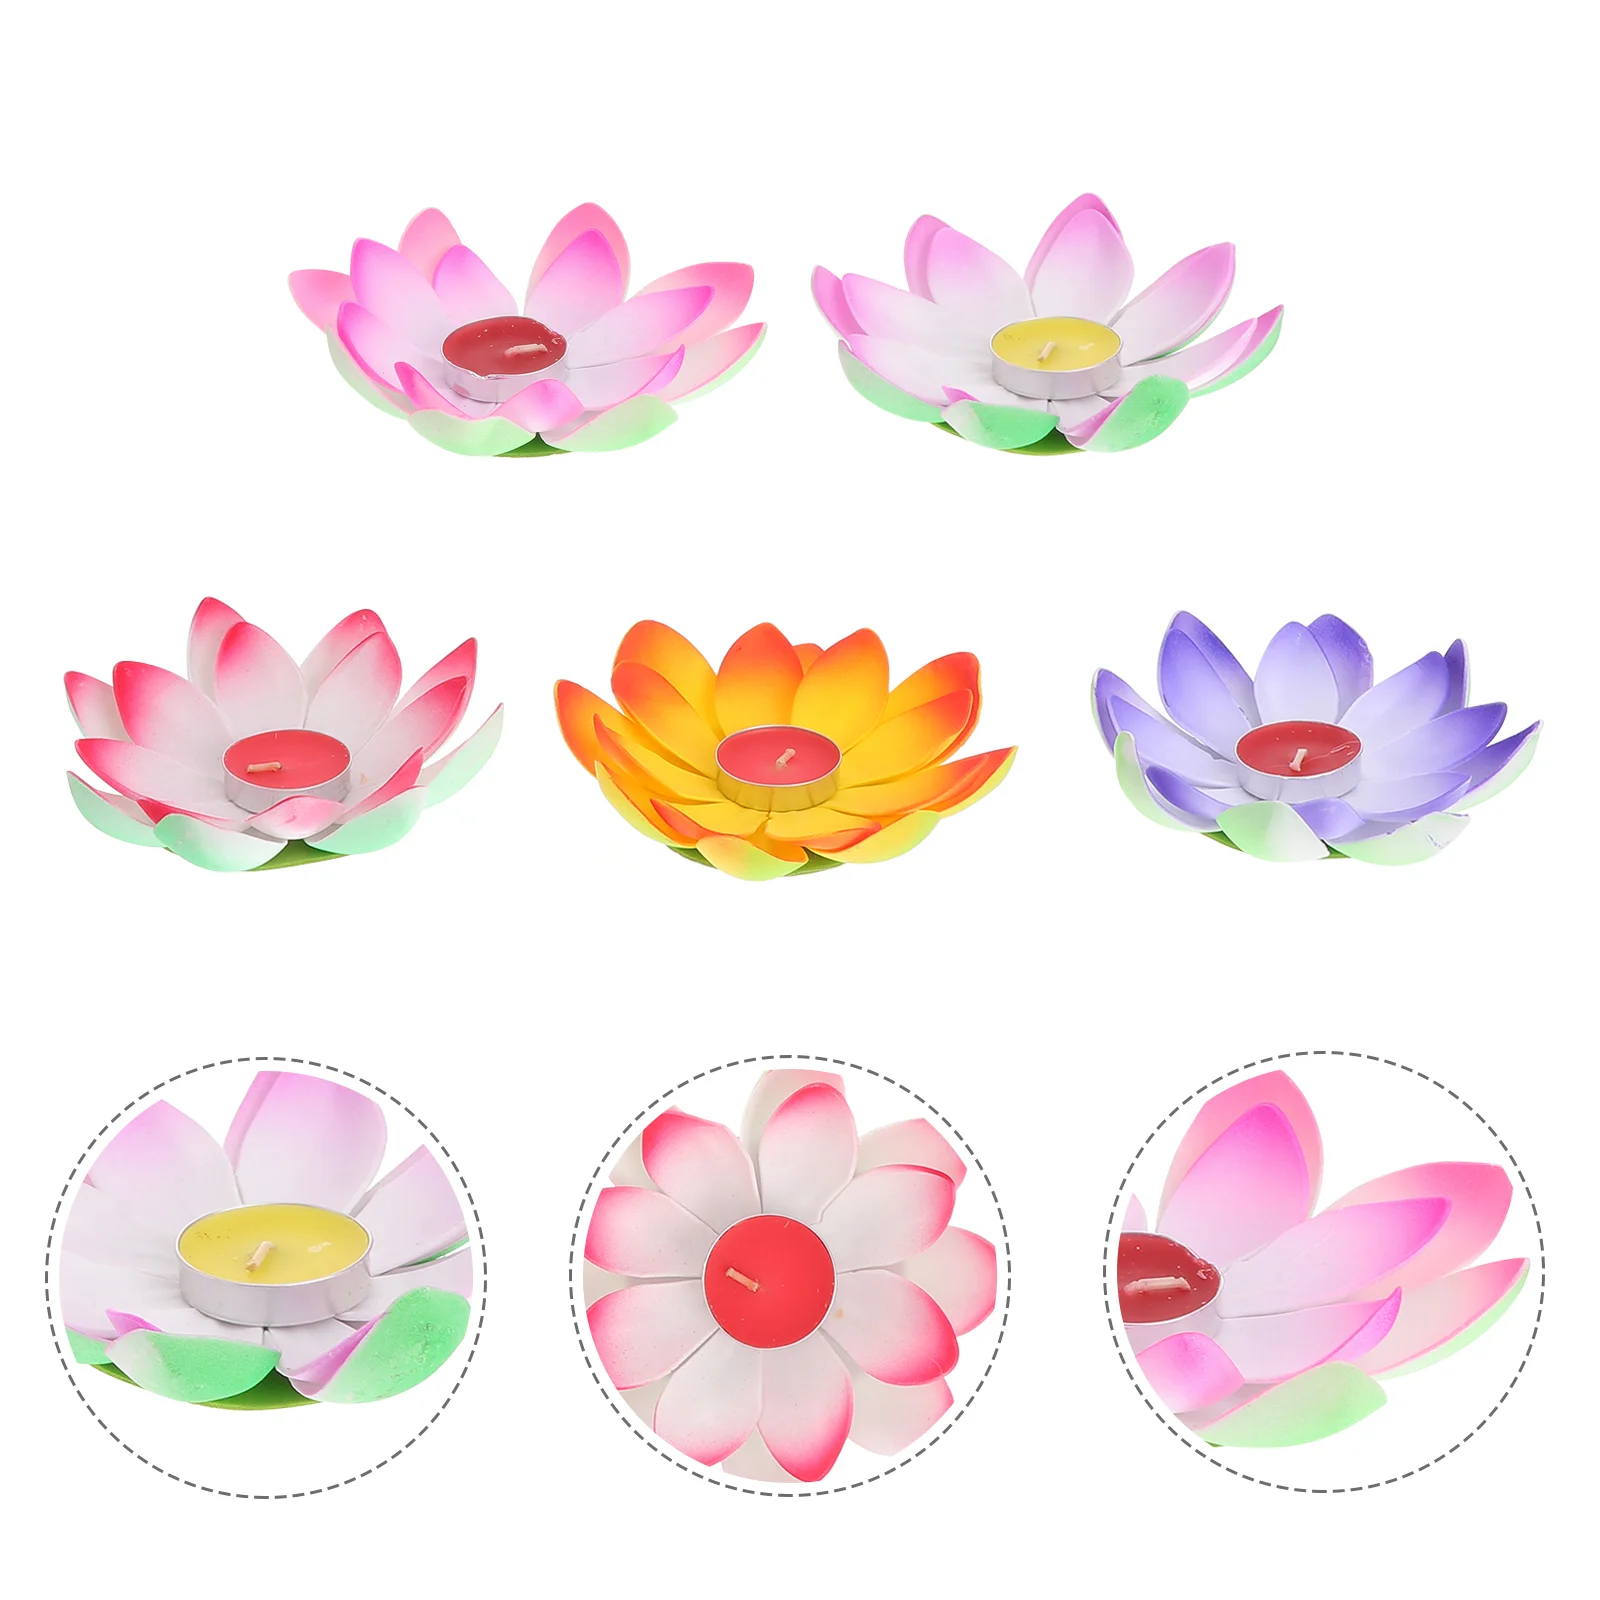 

5 Pcs Blessing Lamp Lotus Shape Light Wishing Decor Water Lily Decorative for Festival